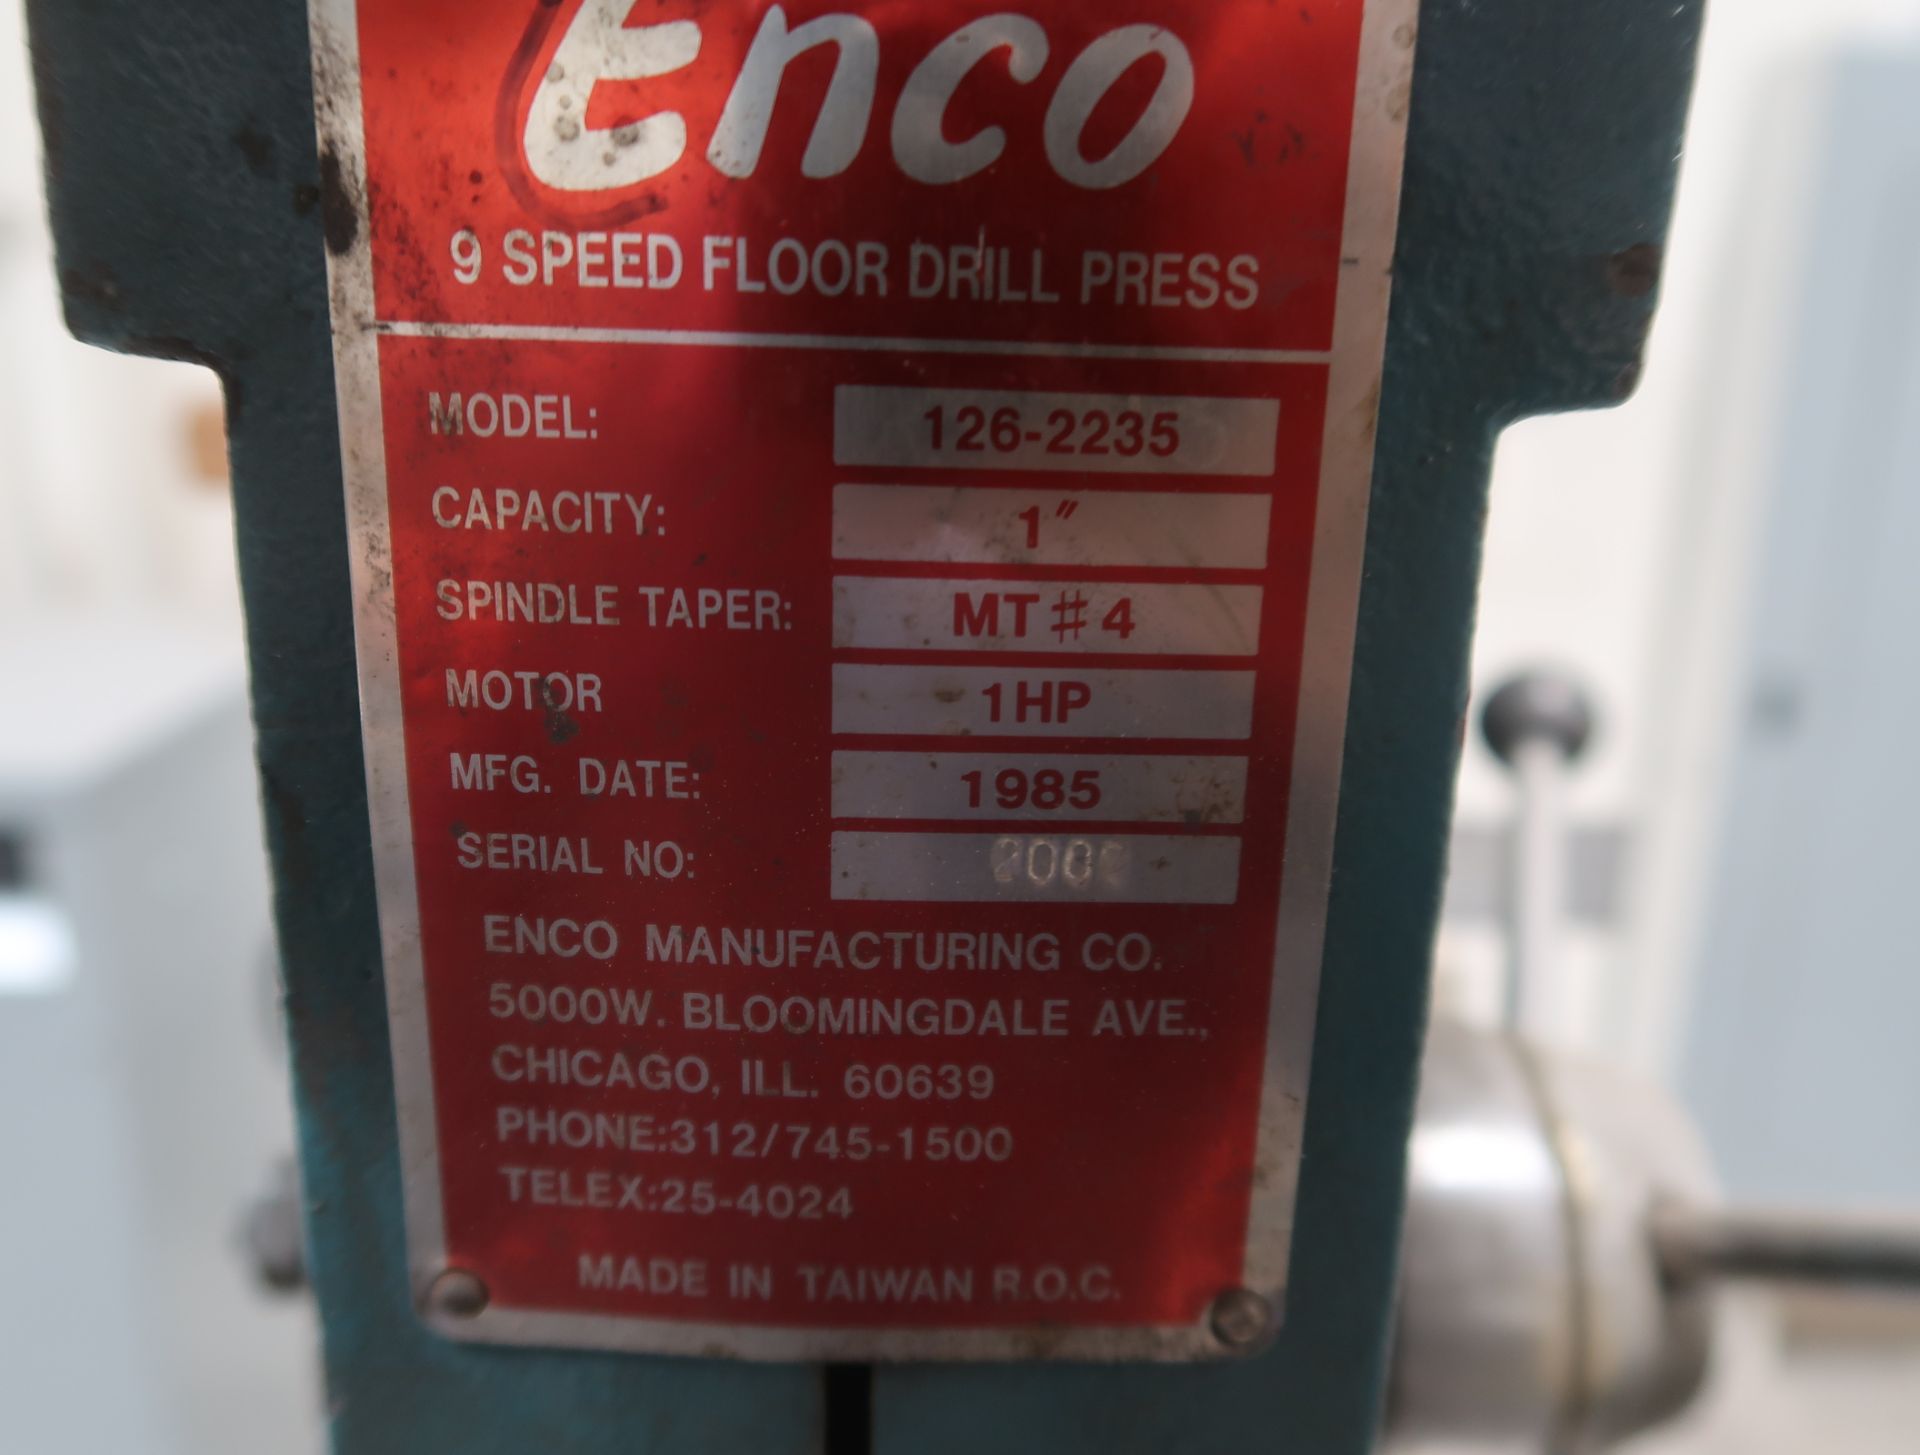 ENCO 9 SPEED FLOOR DRILL PRESS MDL. 126-2253 - Image 2 of 2